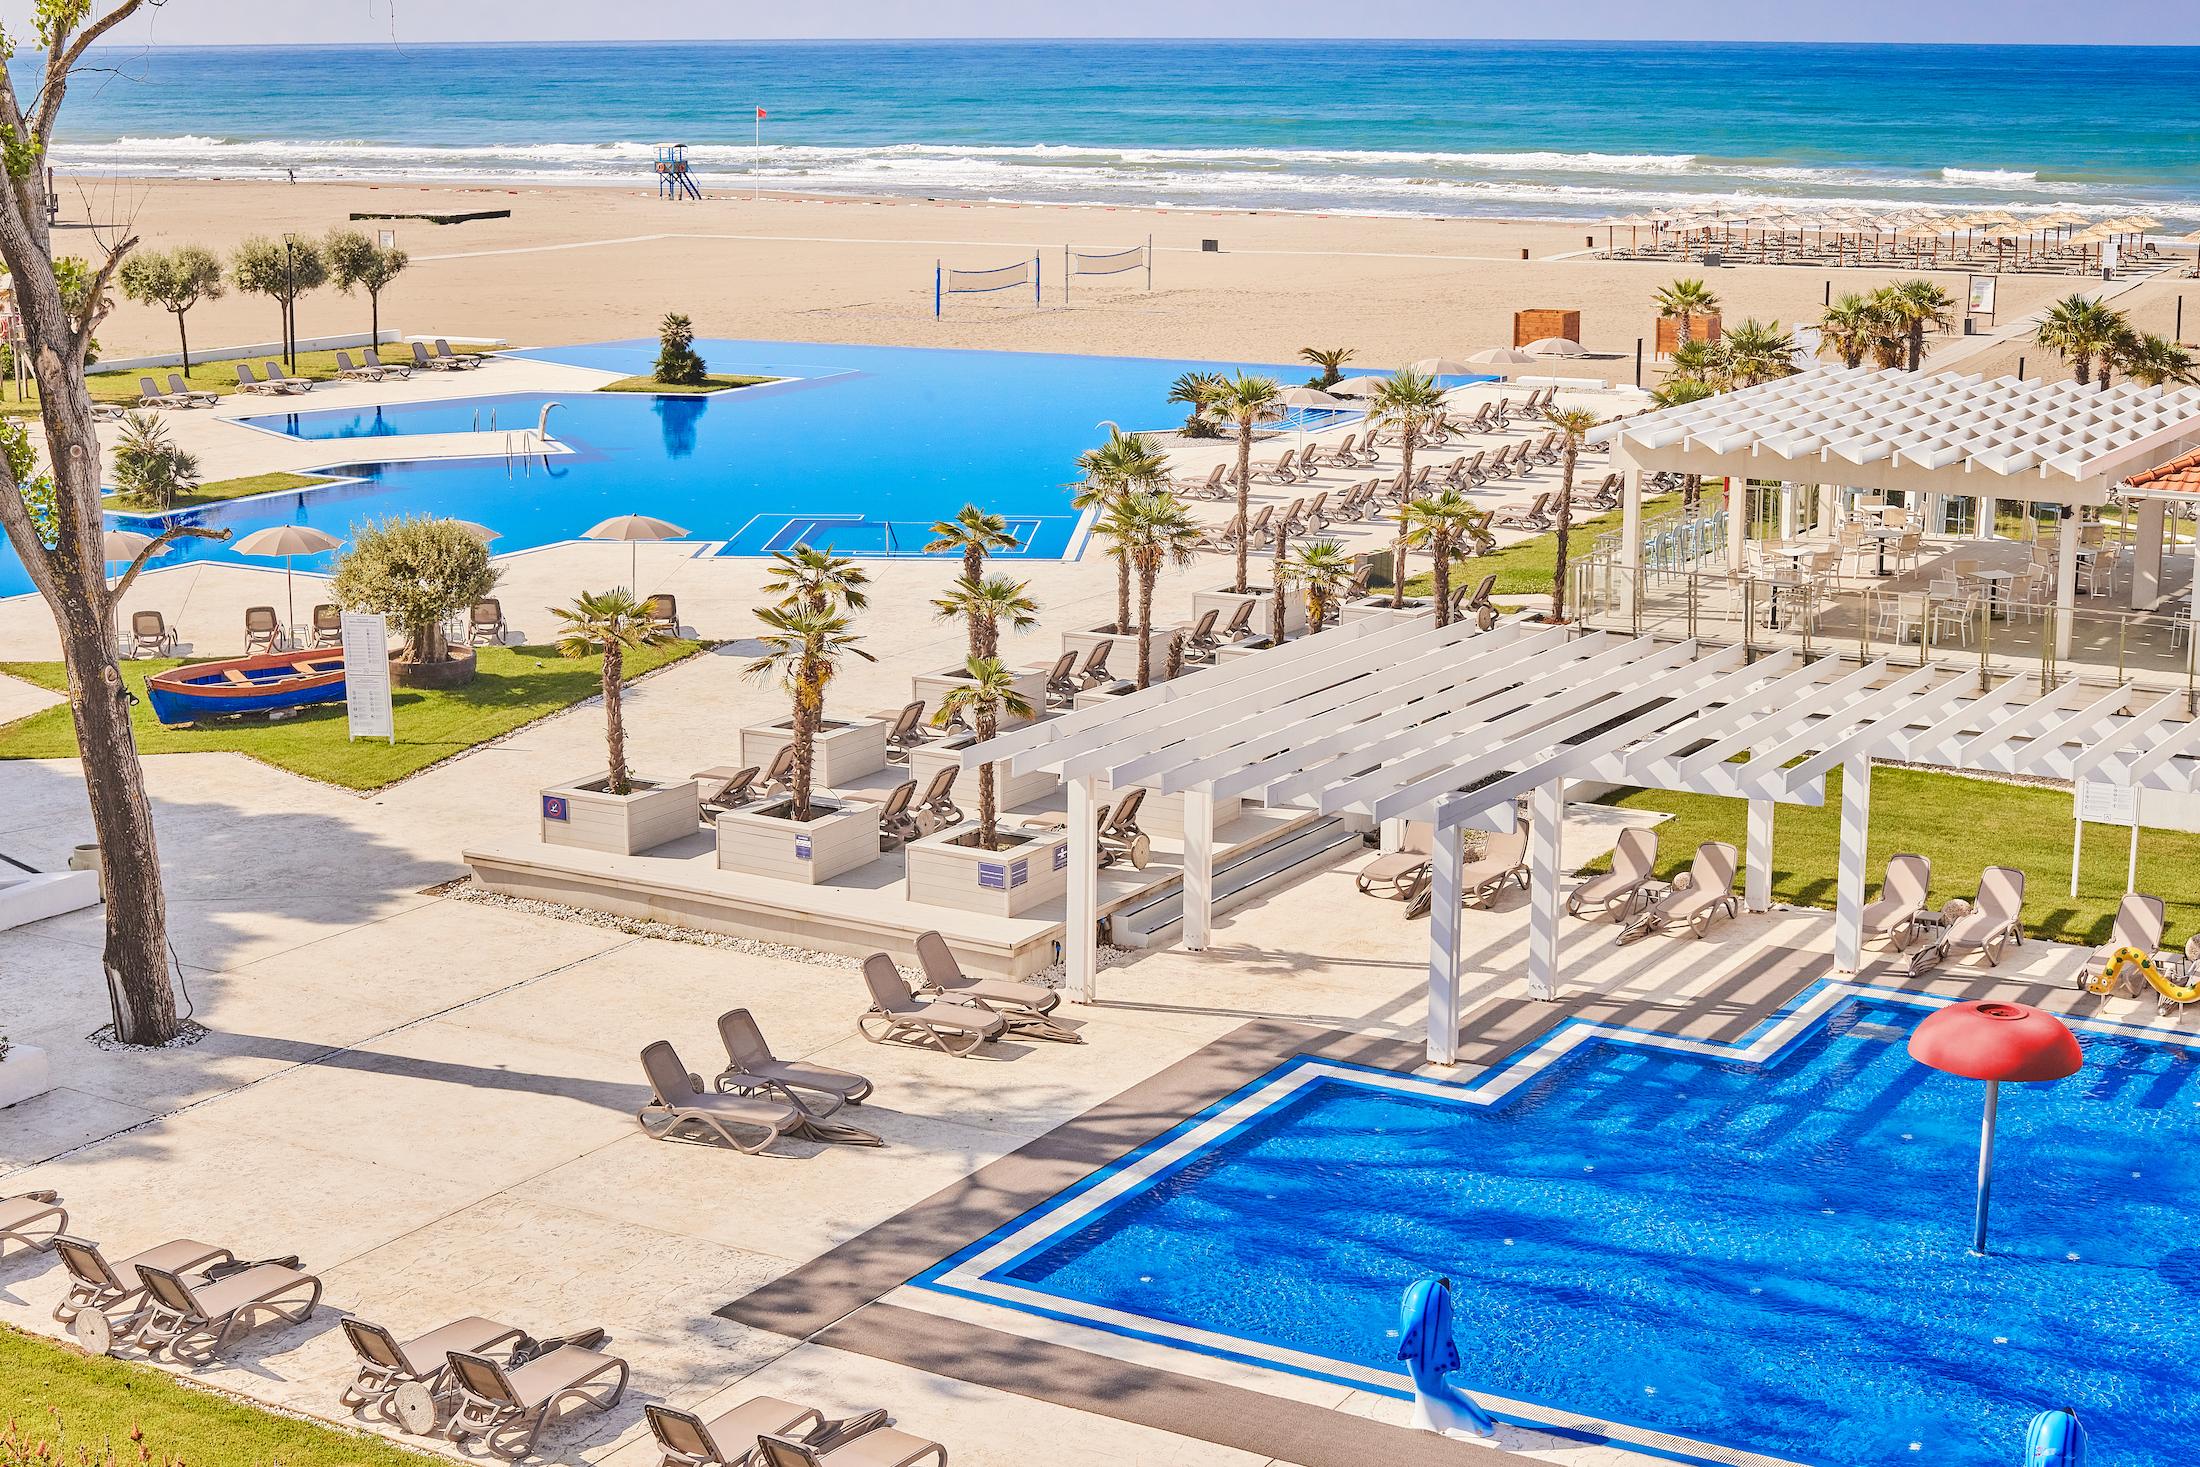 An aerial view of Azul Beach Resort Montenegro's pool